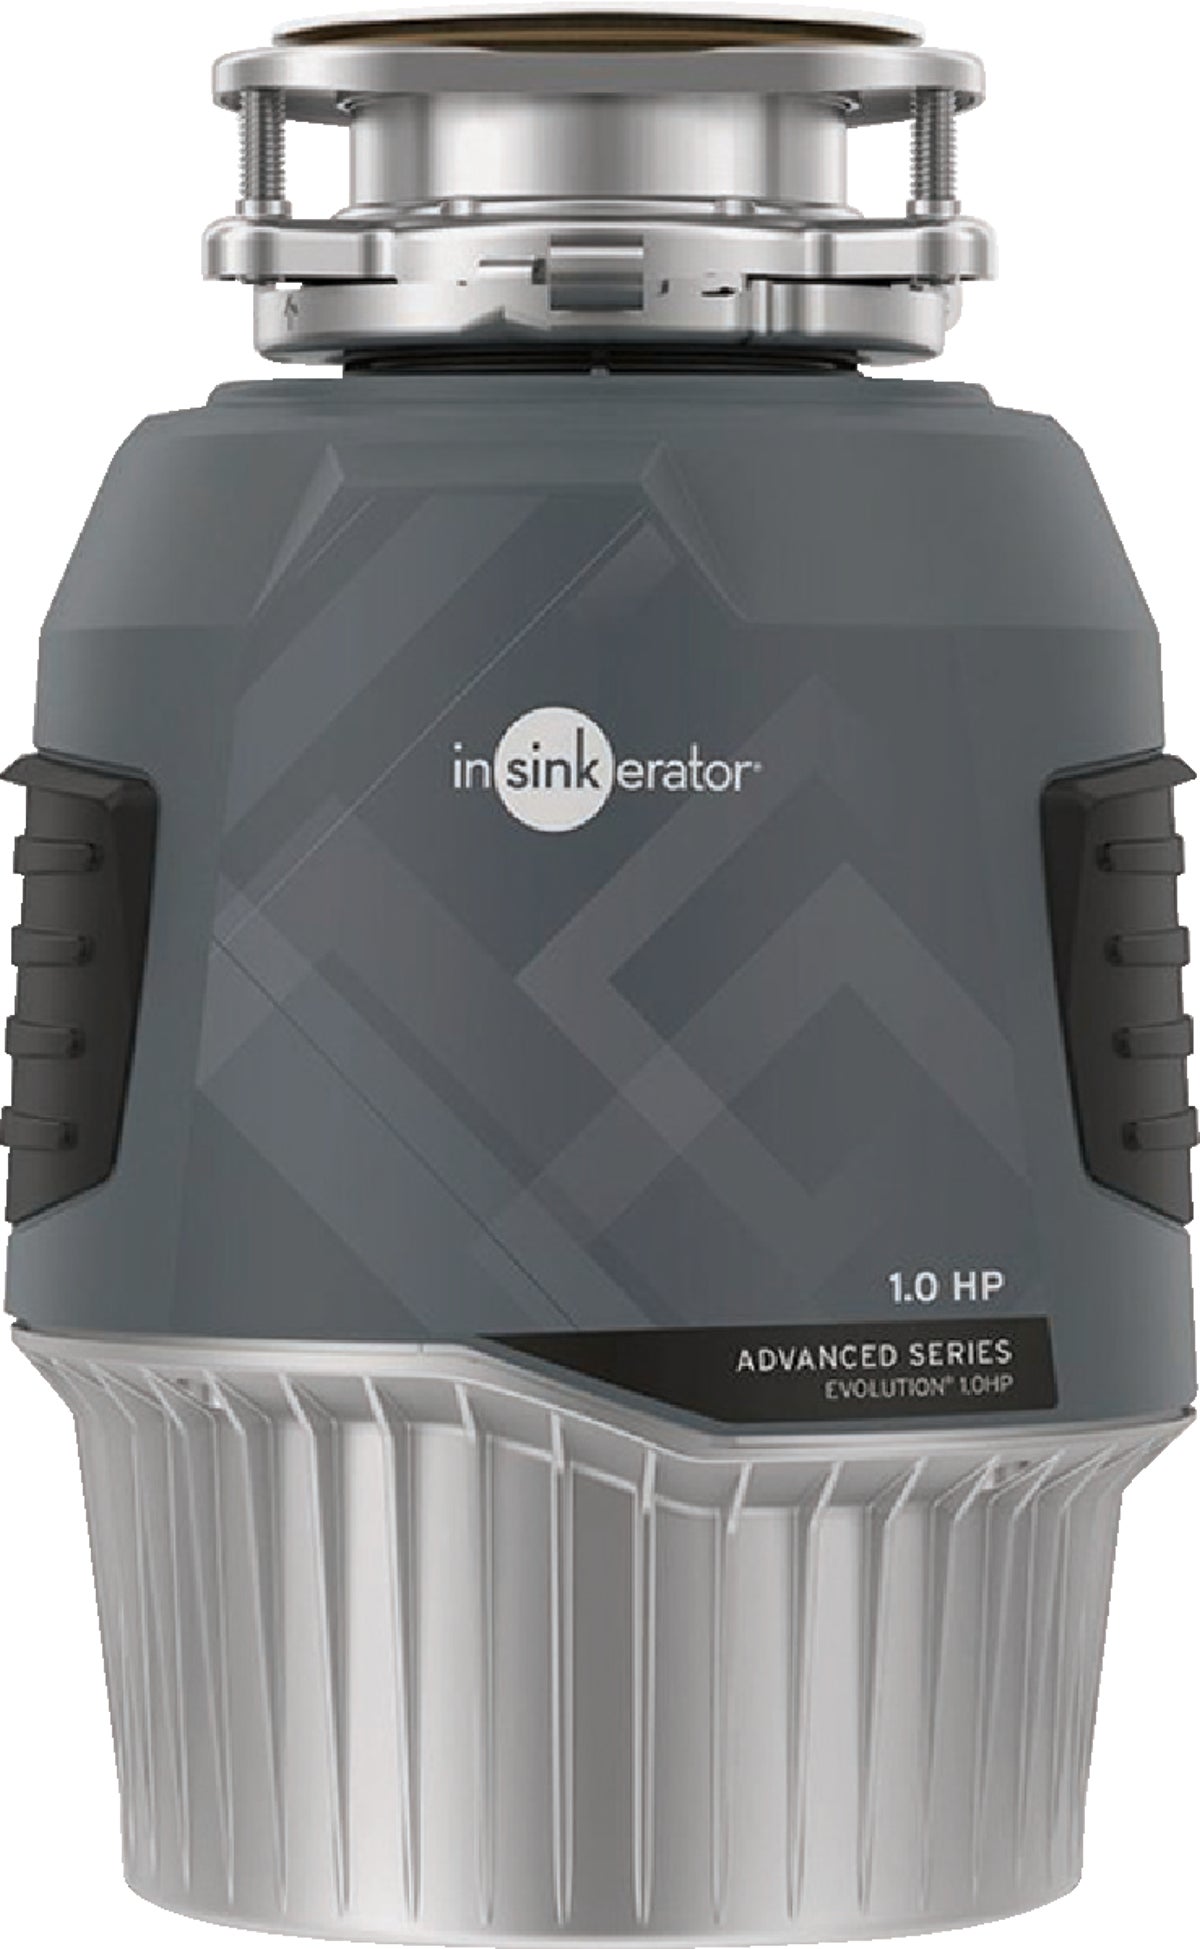 Buy Insinkerator Evolution HP Garbage Disposer